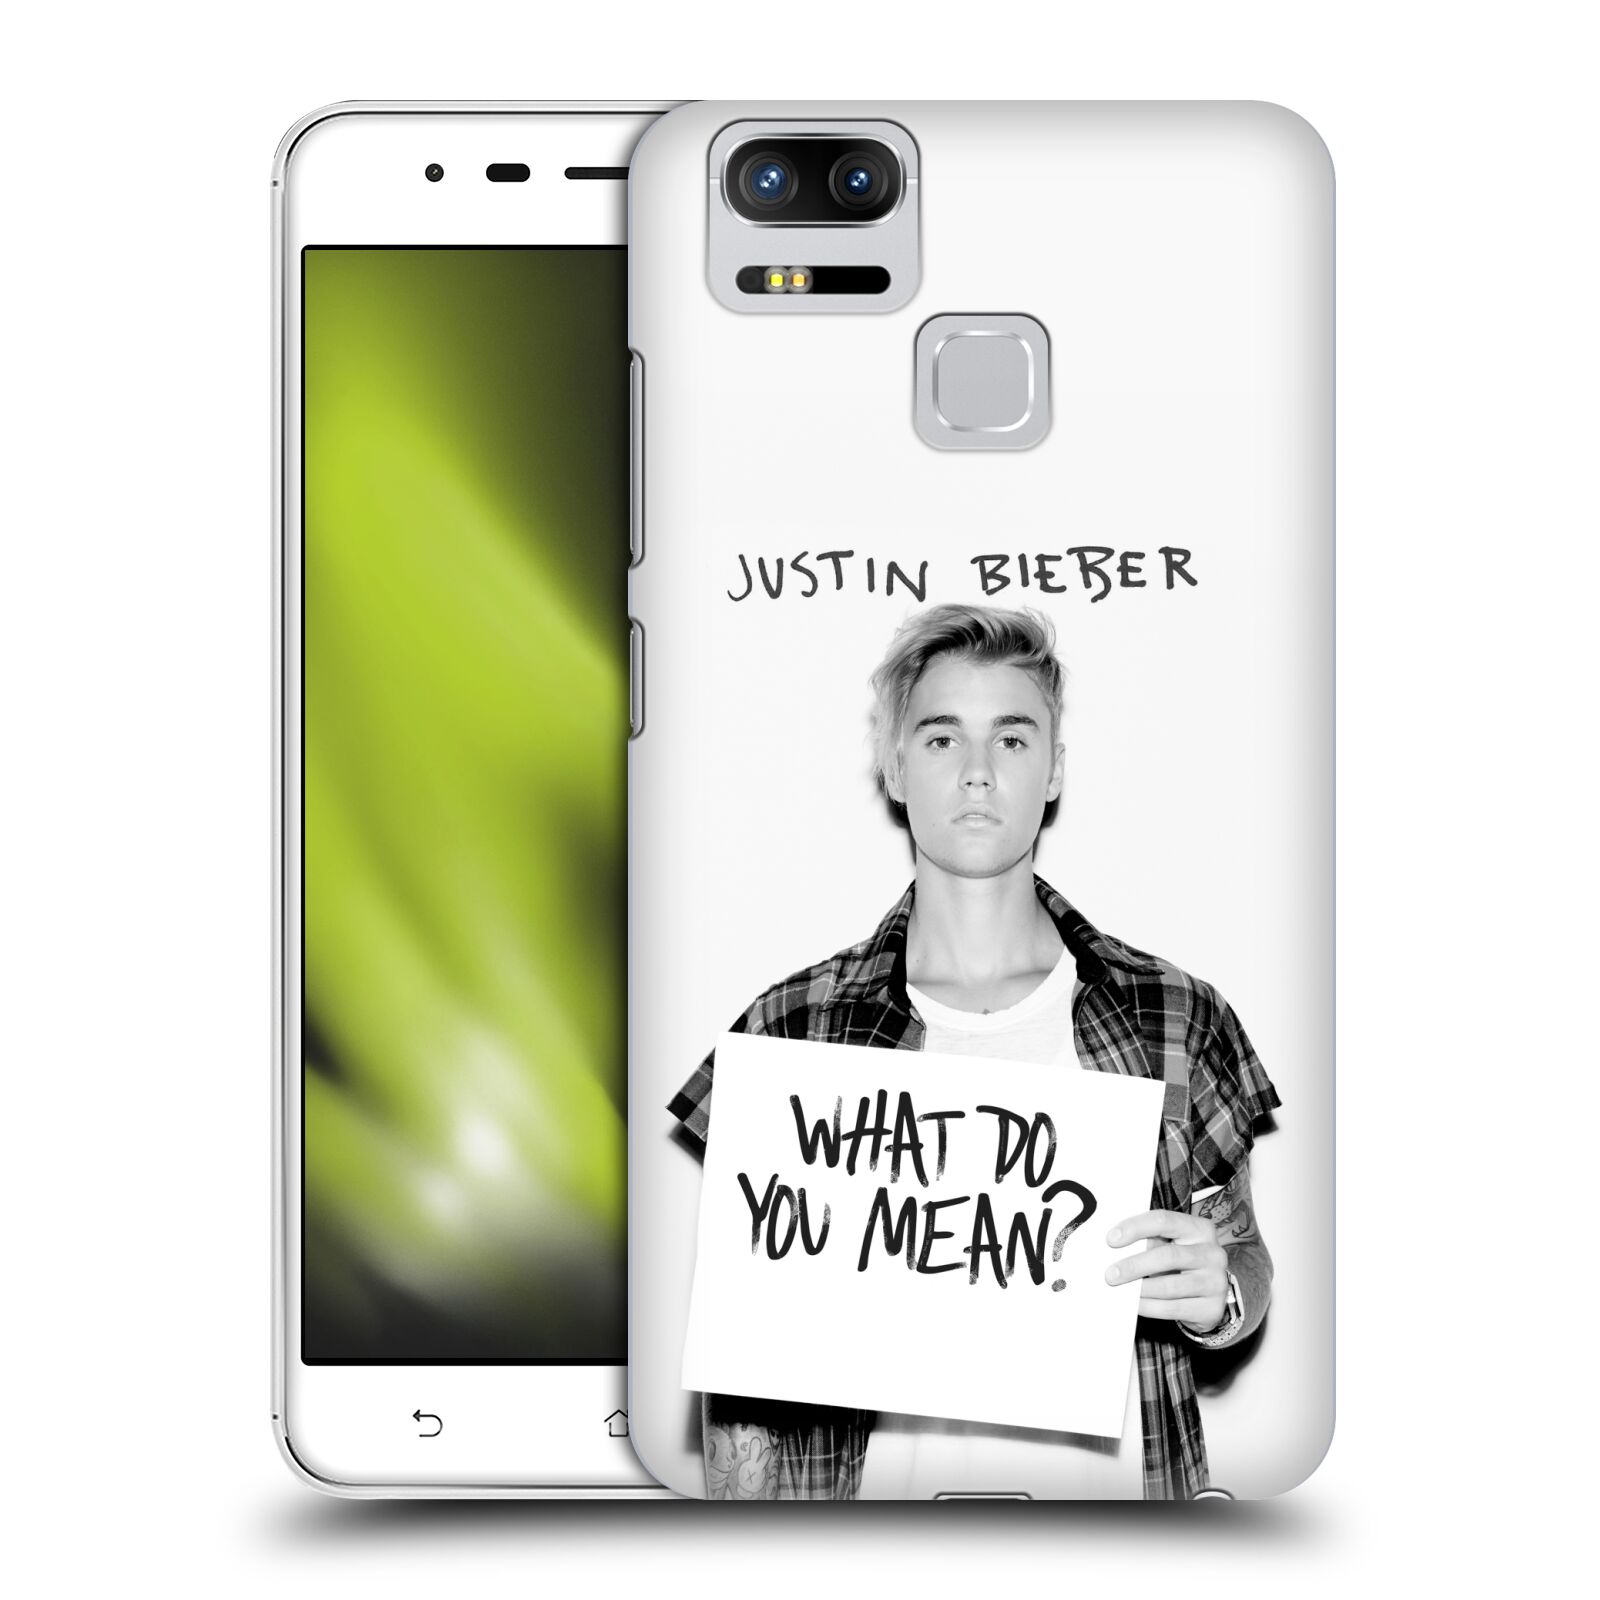 HEAD CASE plastový obal na mobil Asus Zenfone 3 Zoom ZE553KL Justin Bieber foto Purpose What do you mean